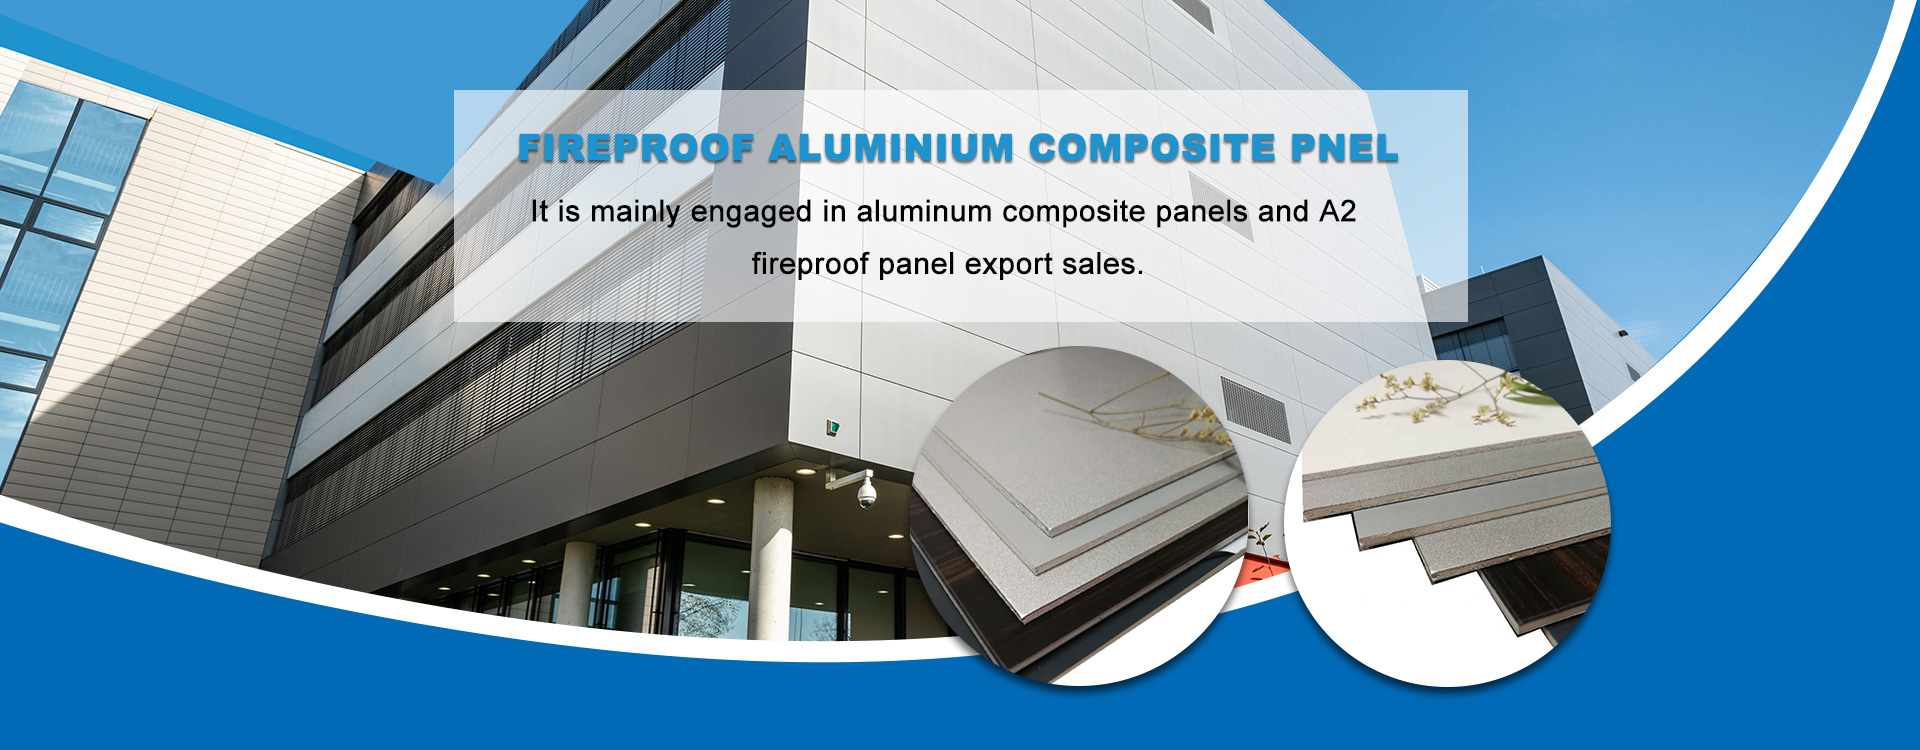 China Fireproof Aluminum Composite Panel Manufacturers